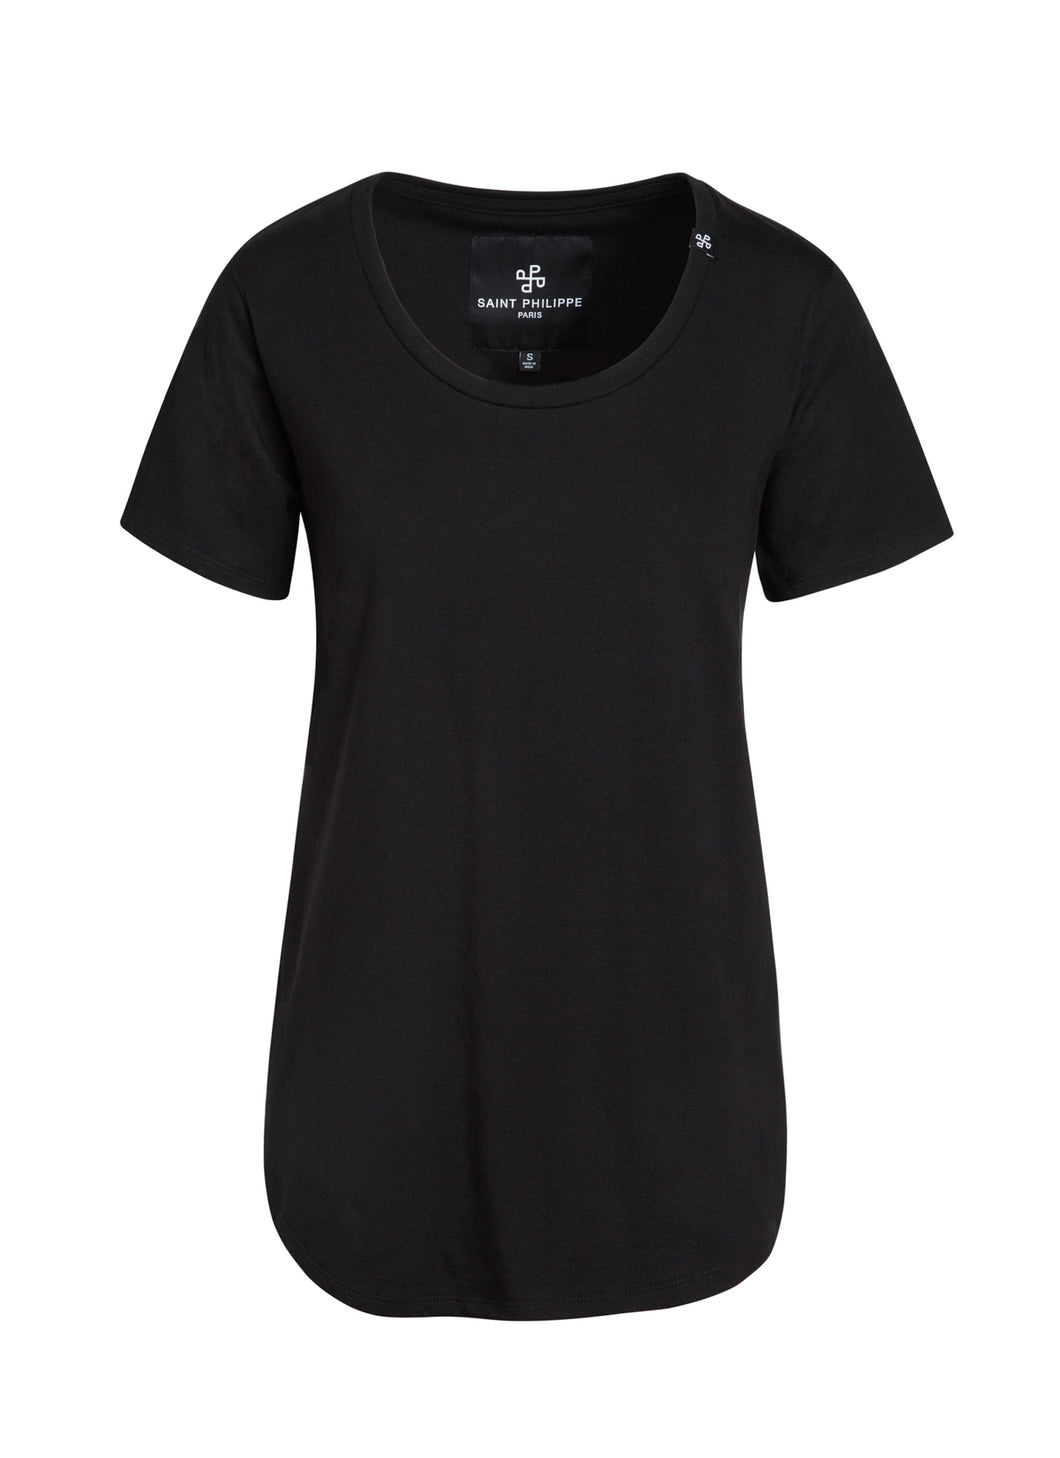 Women's Shirt Plain Black